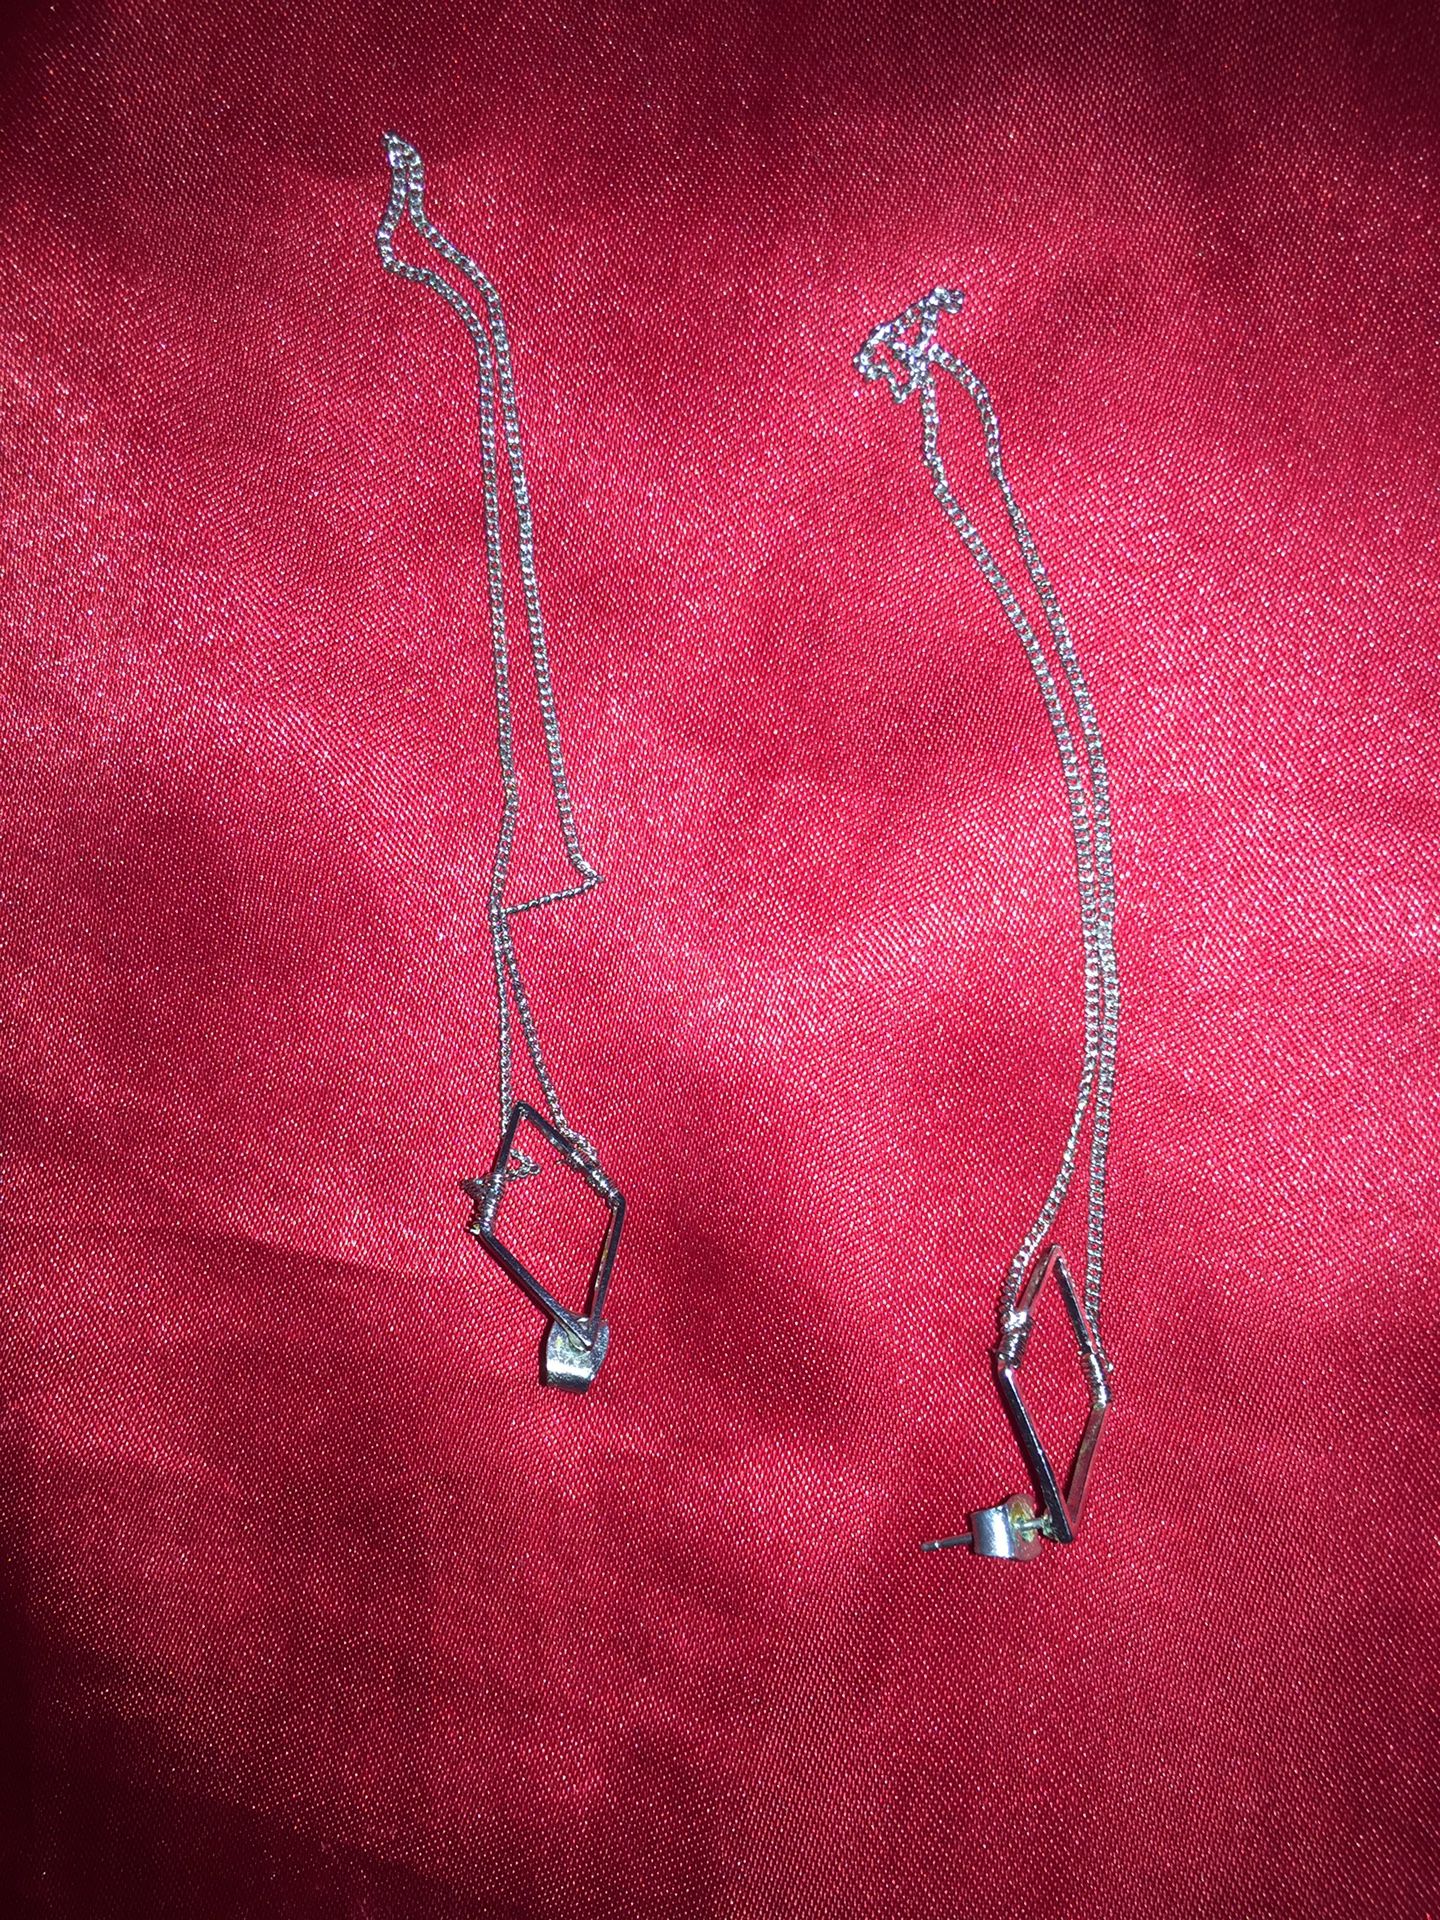 Diamond chain dangle earrings